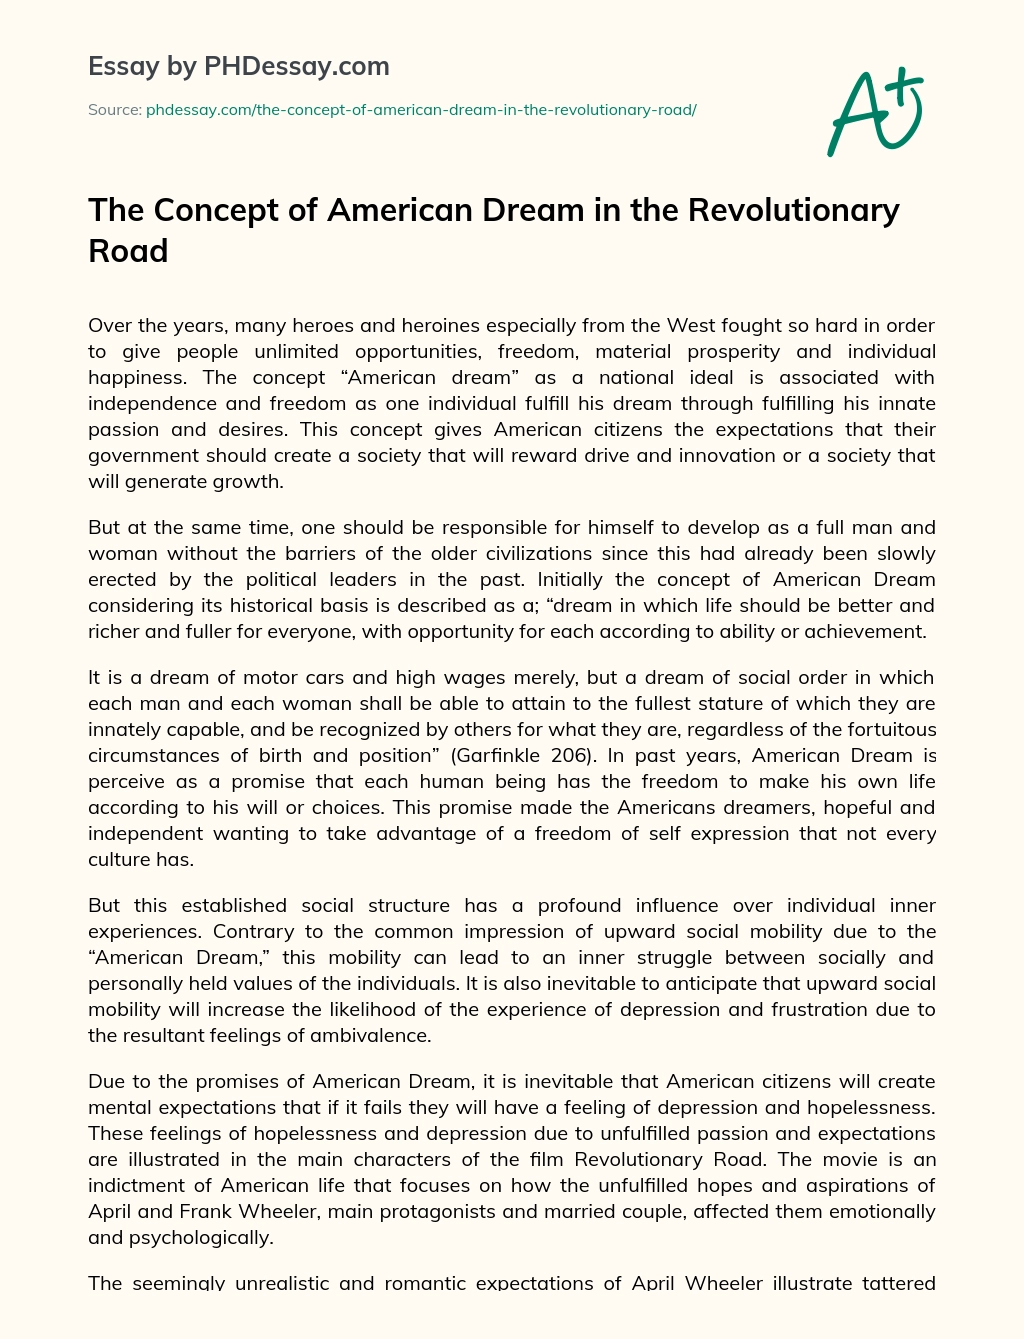 The Concept of American Dream in the Revolutionary Road essay